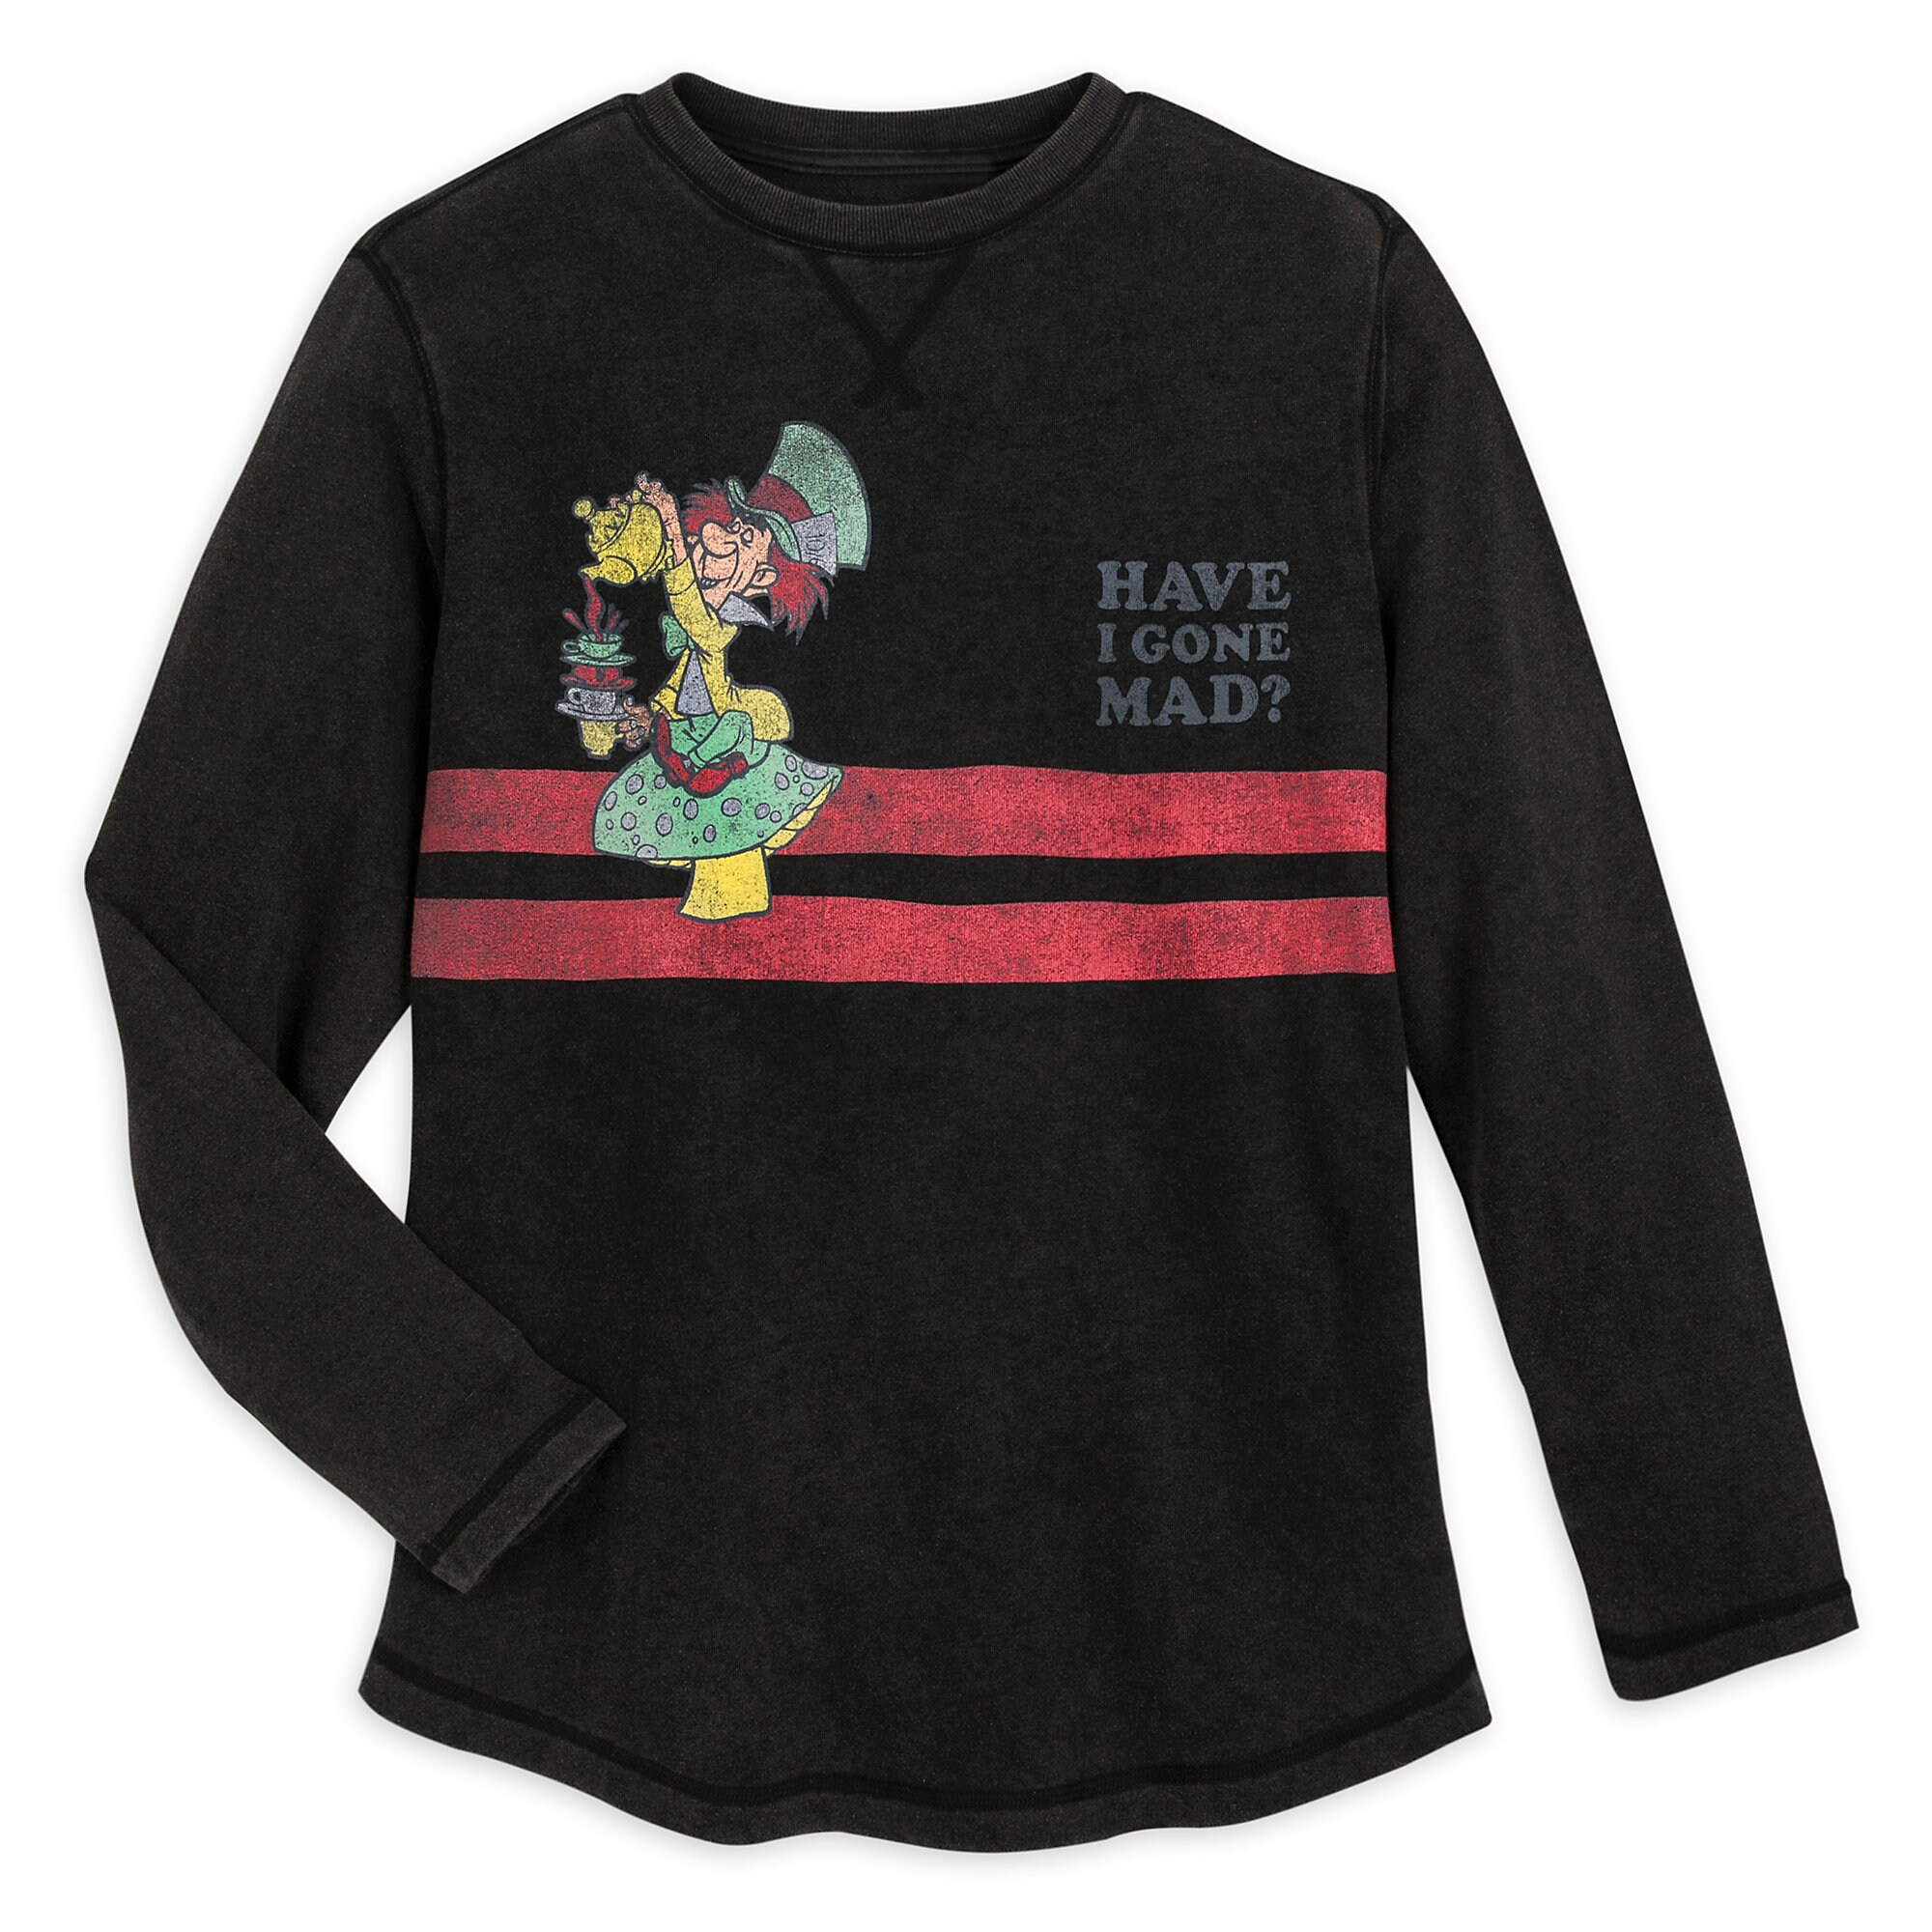 Mad Hatter Long Sleeve T-Shirt for Men by Junk Food - Alice in Wonderland